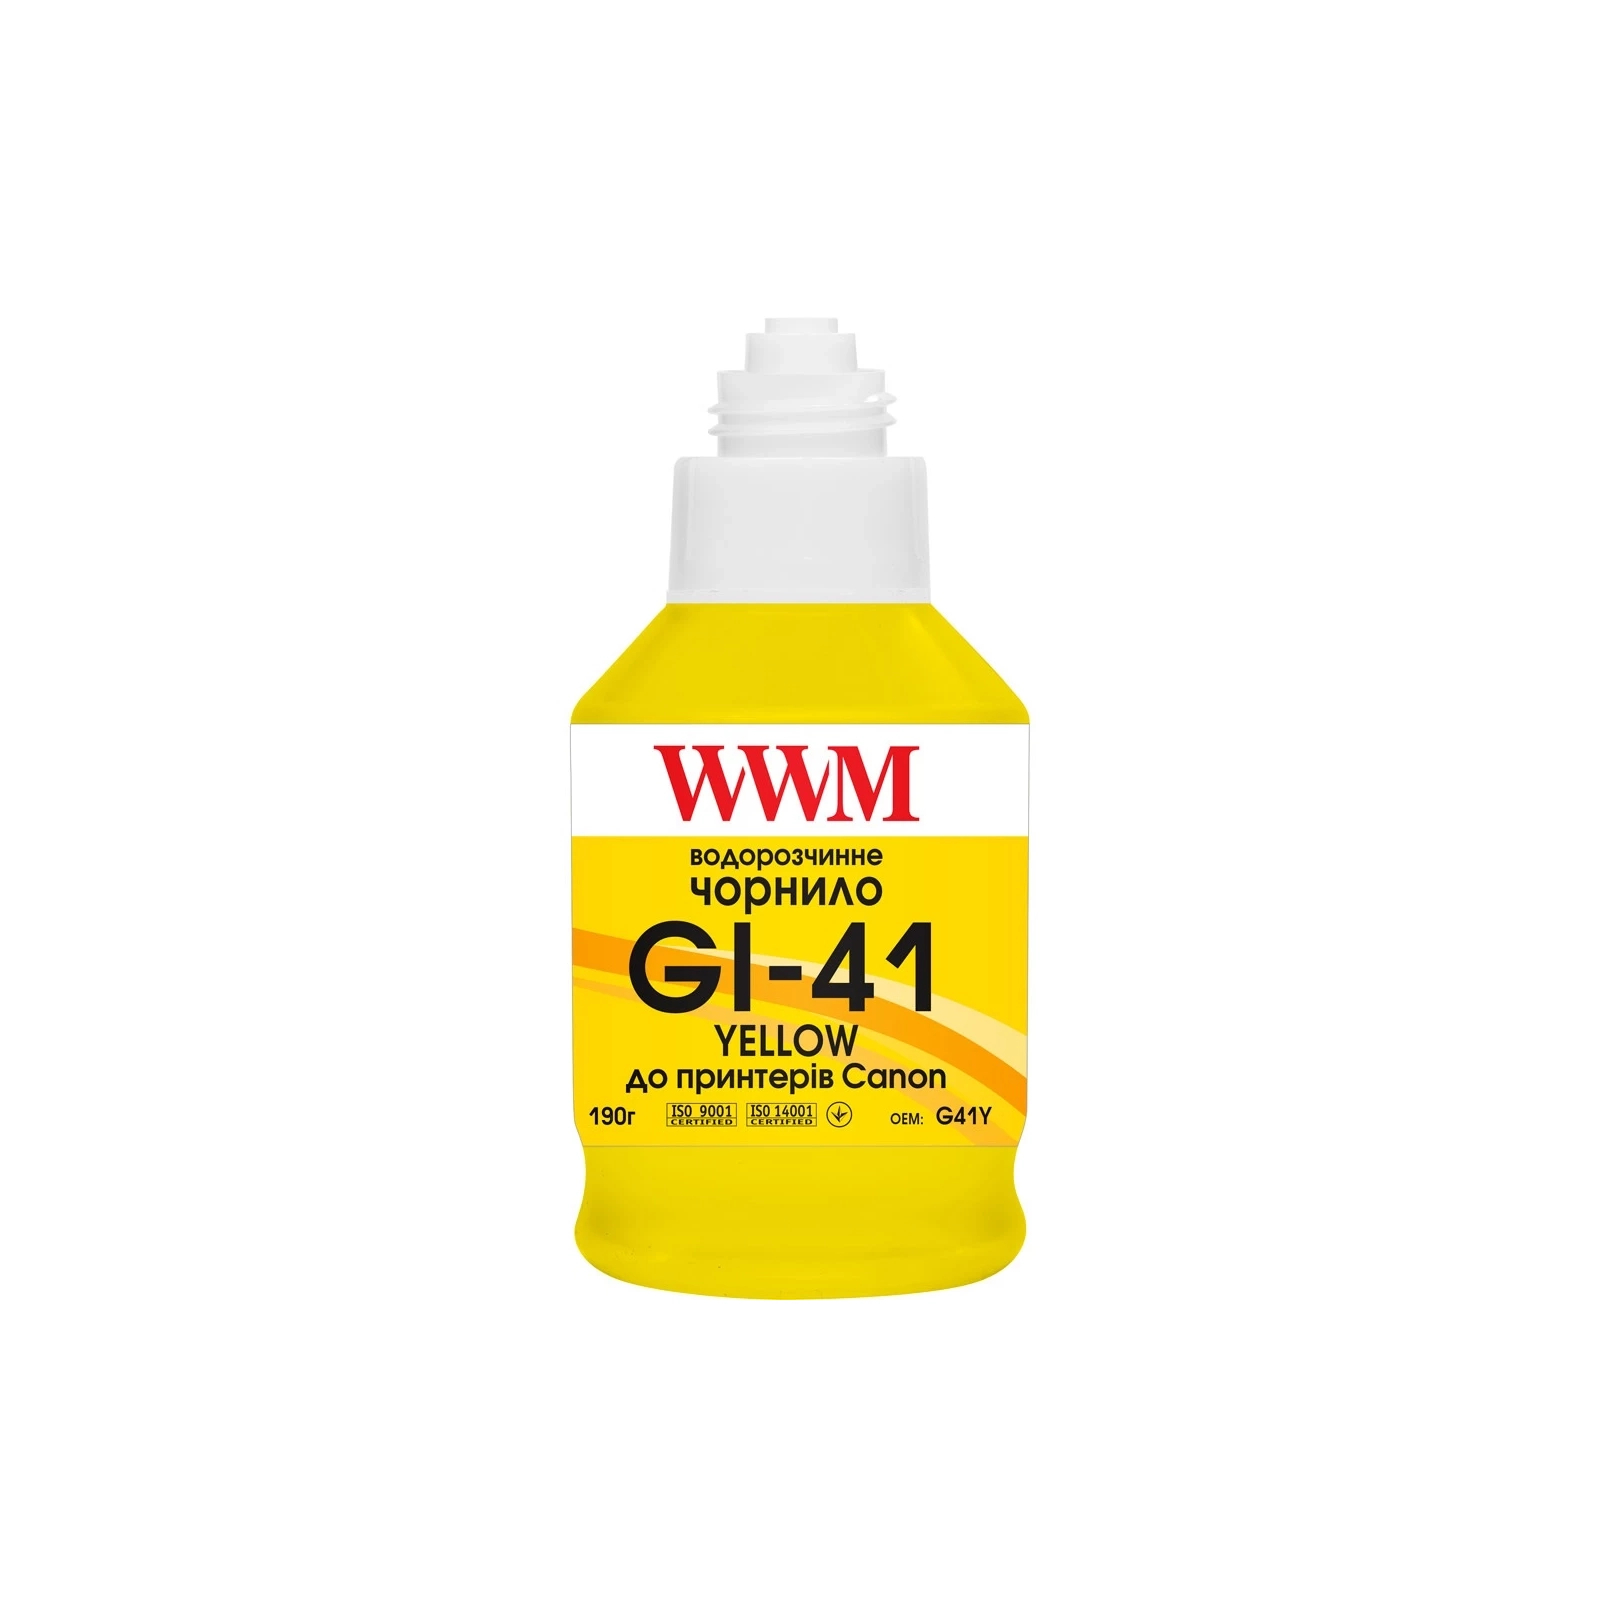 Чернила WWM Canon GI-41 для Pixma G2420/3420 190г Yellow (KeyLock) (G41Y) изображение 2